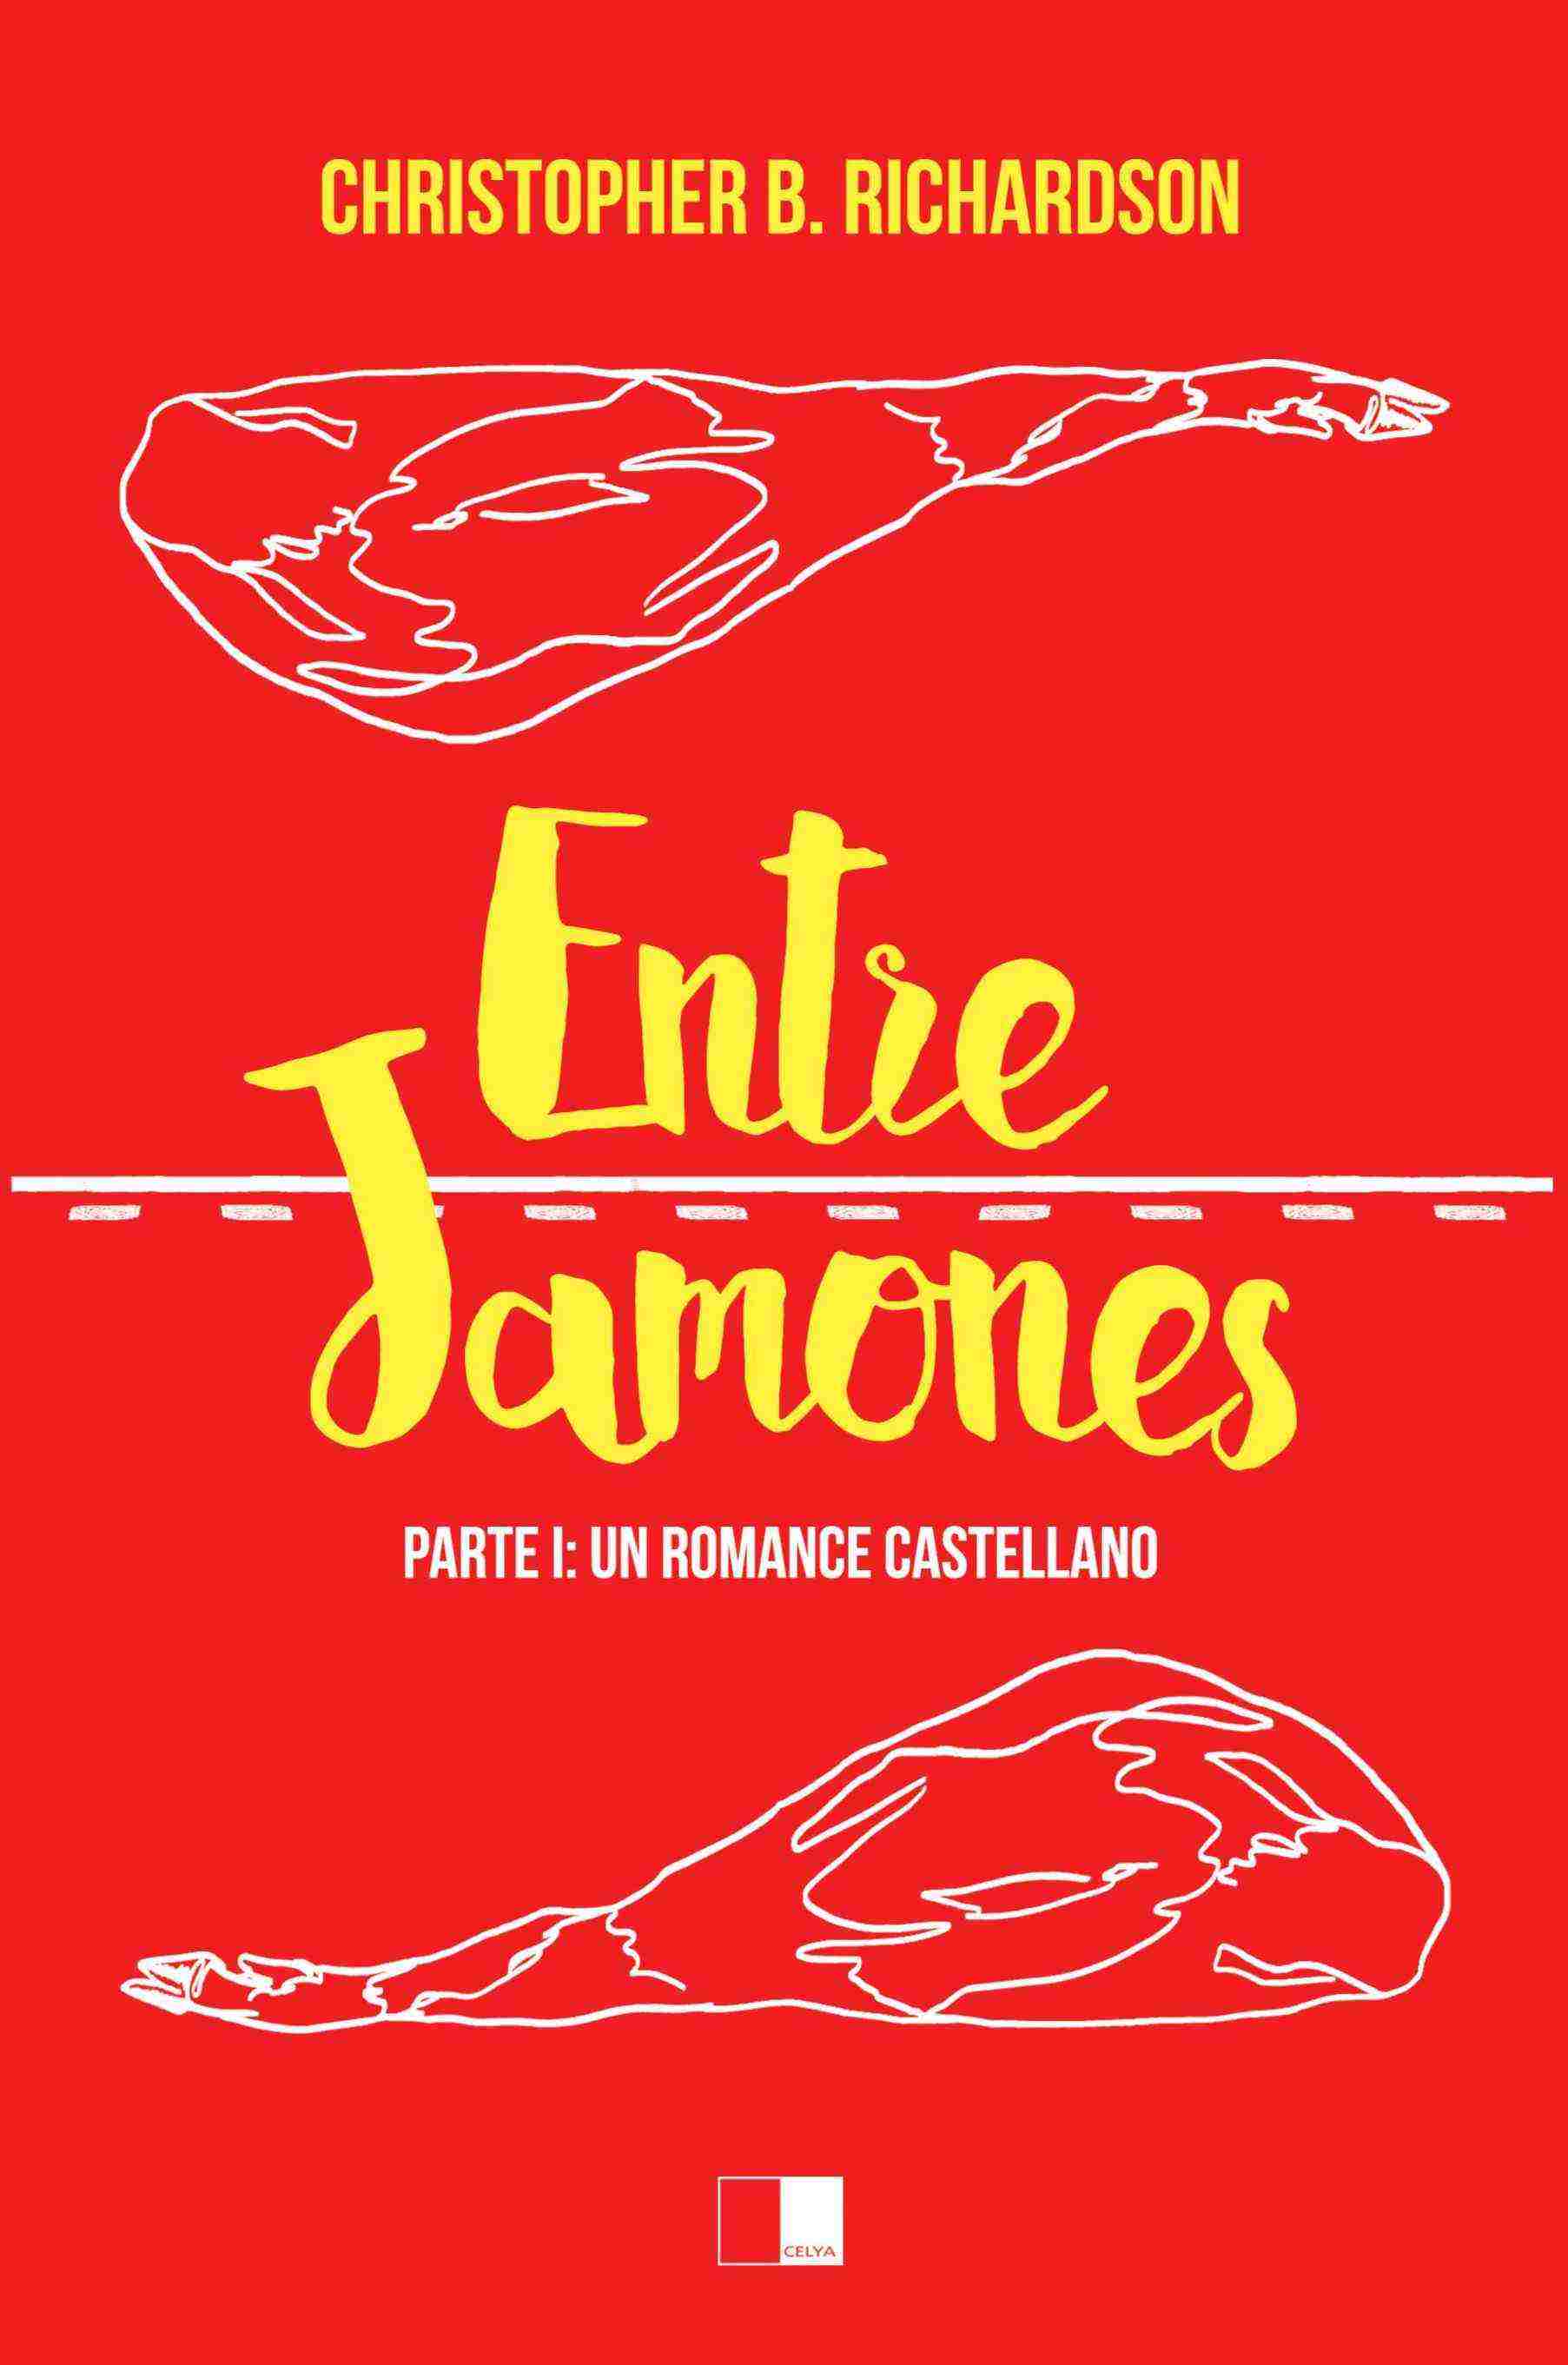 ENTRE JAMONES. Parte I: Un romance castellano